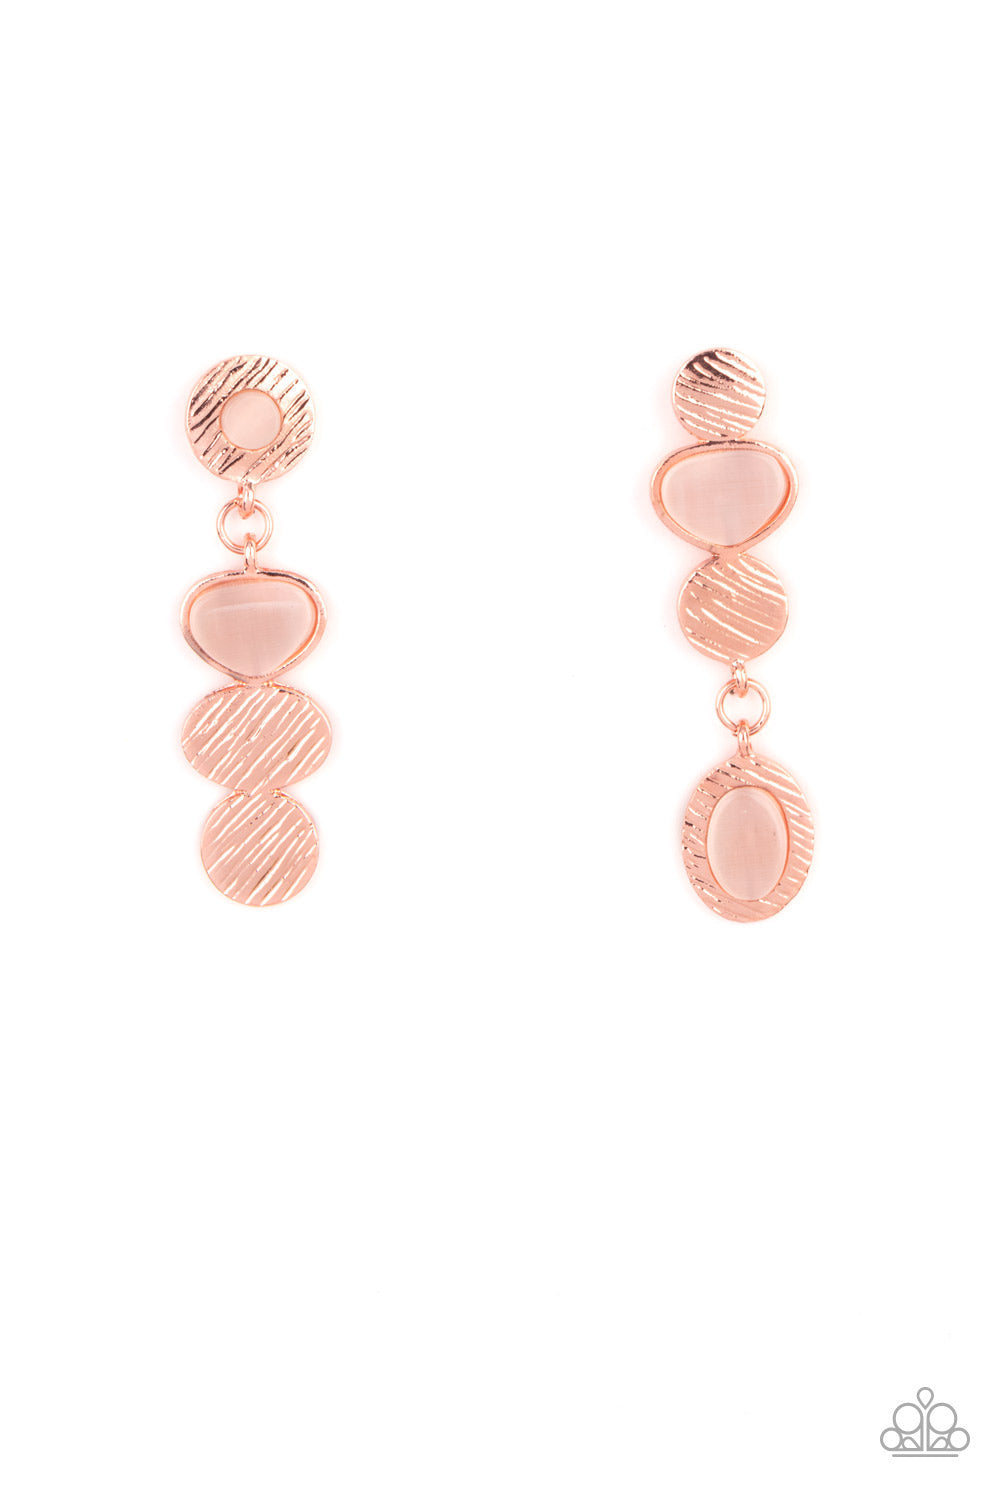 Asymmetrical Appeal - Copper Earrings - Princess Glam Shop